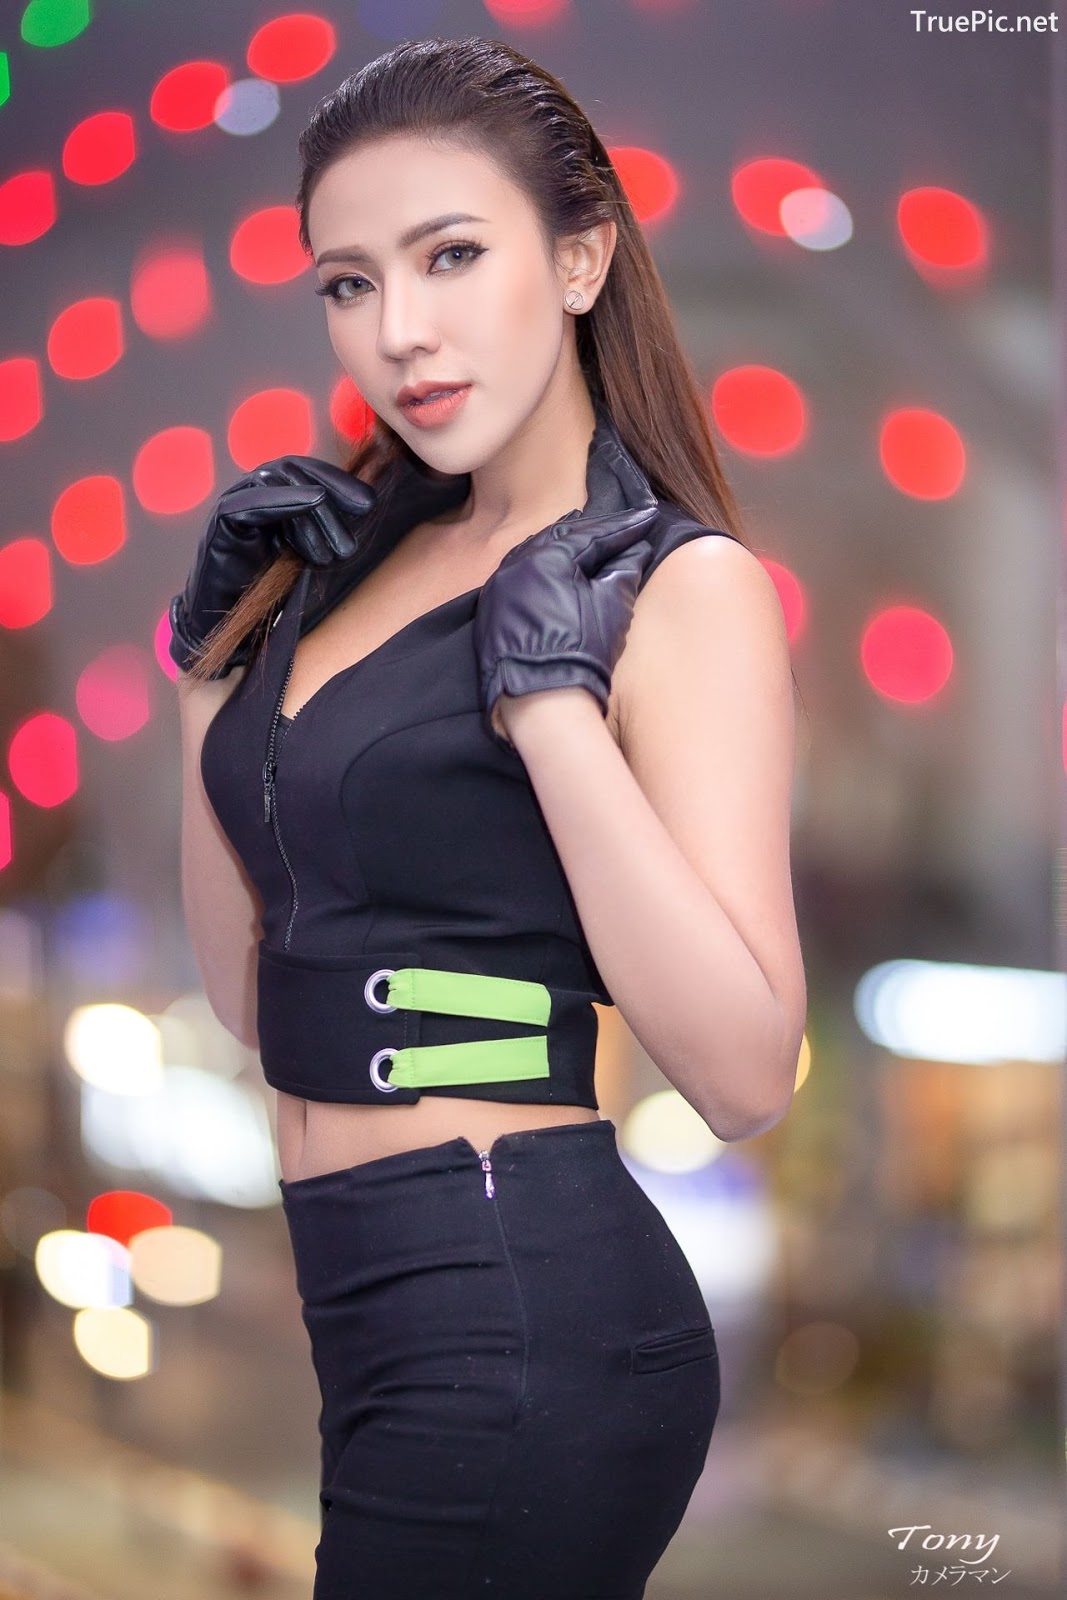 Hot Thai Racing Girl At Motor Expo 2019 Ảnh đẹp